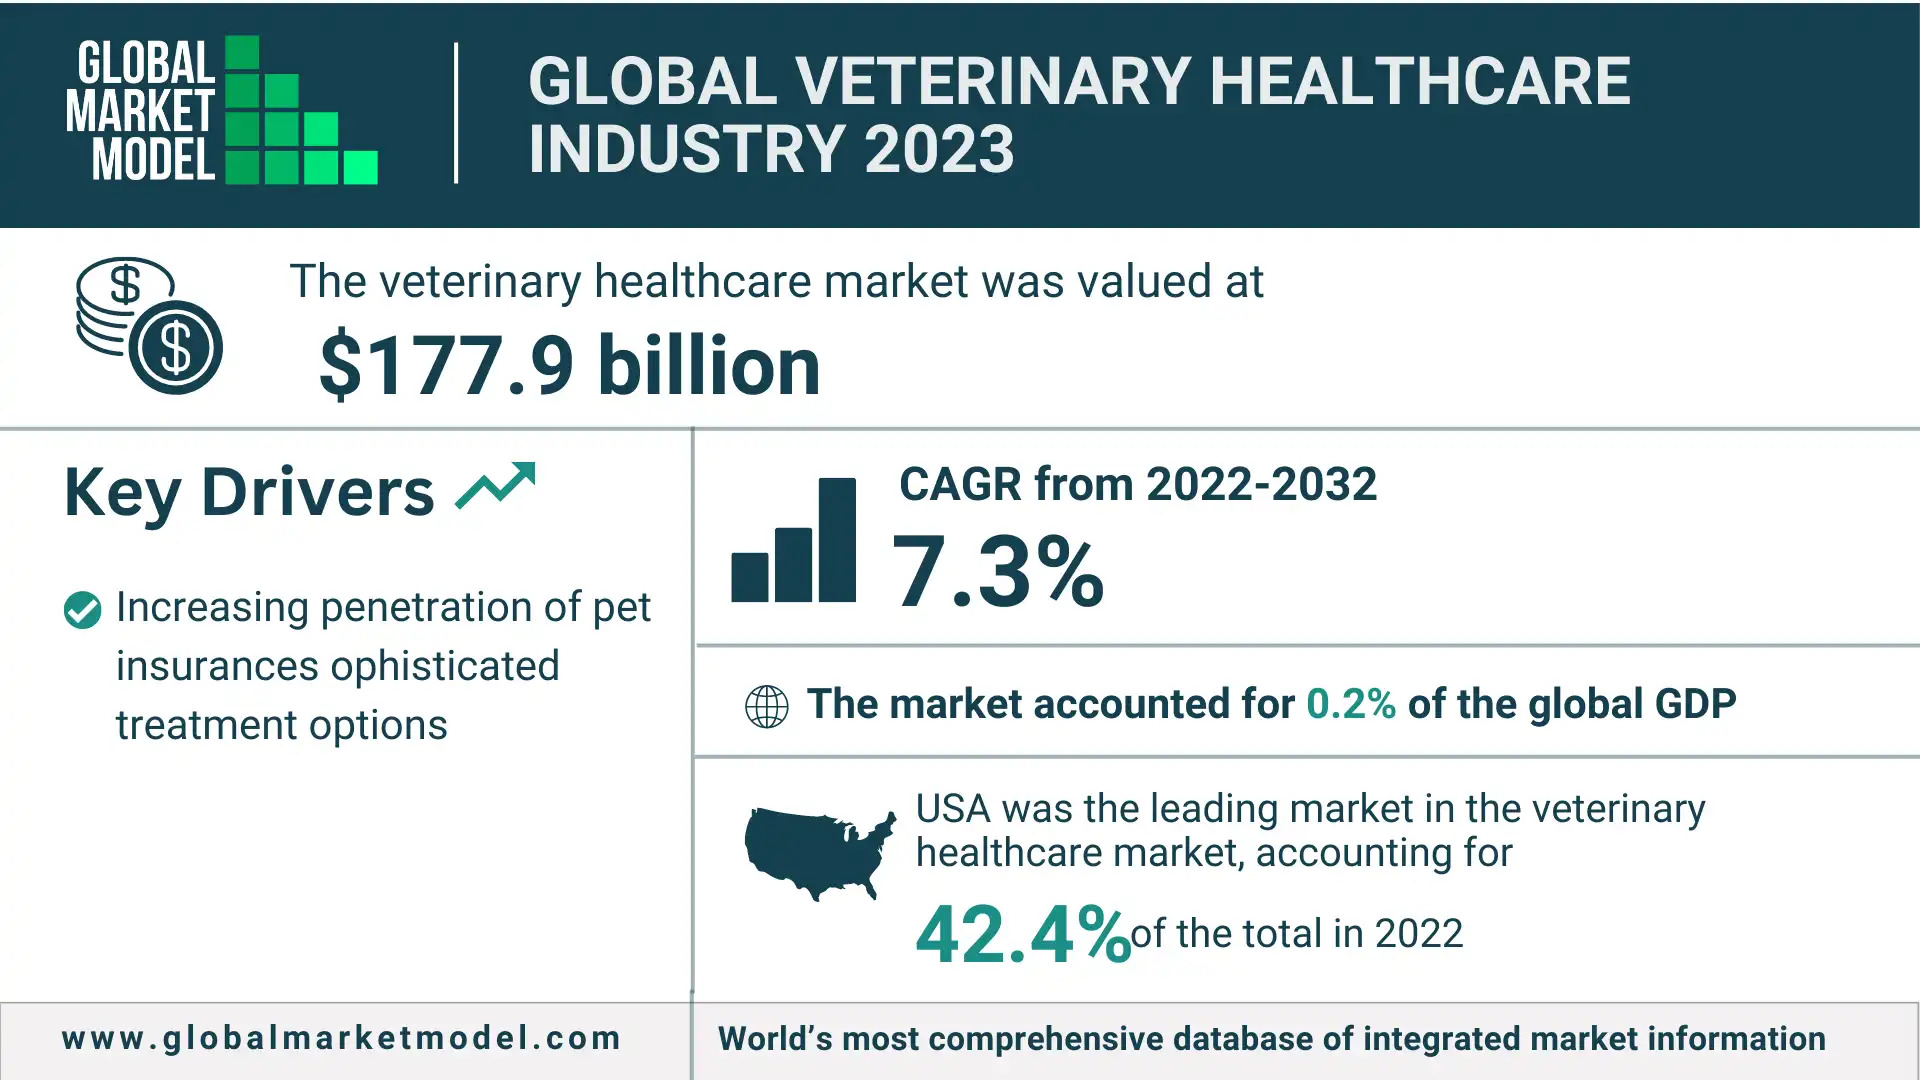 Global Veterinary Healthcare Industry 2023